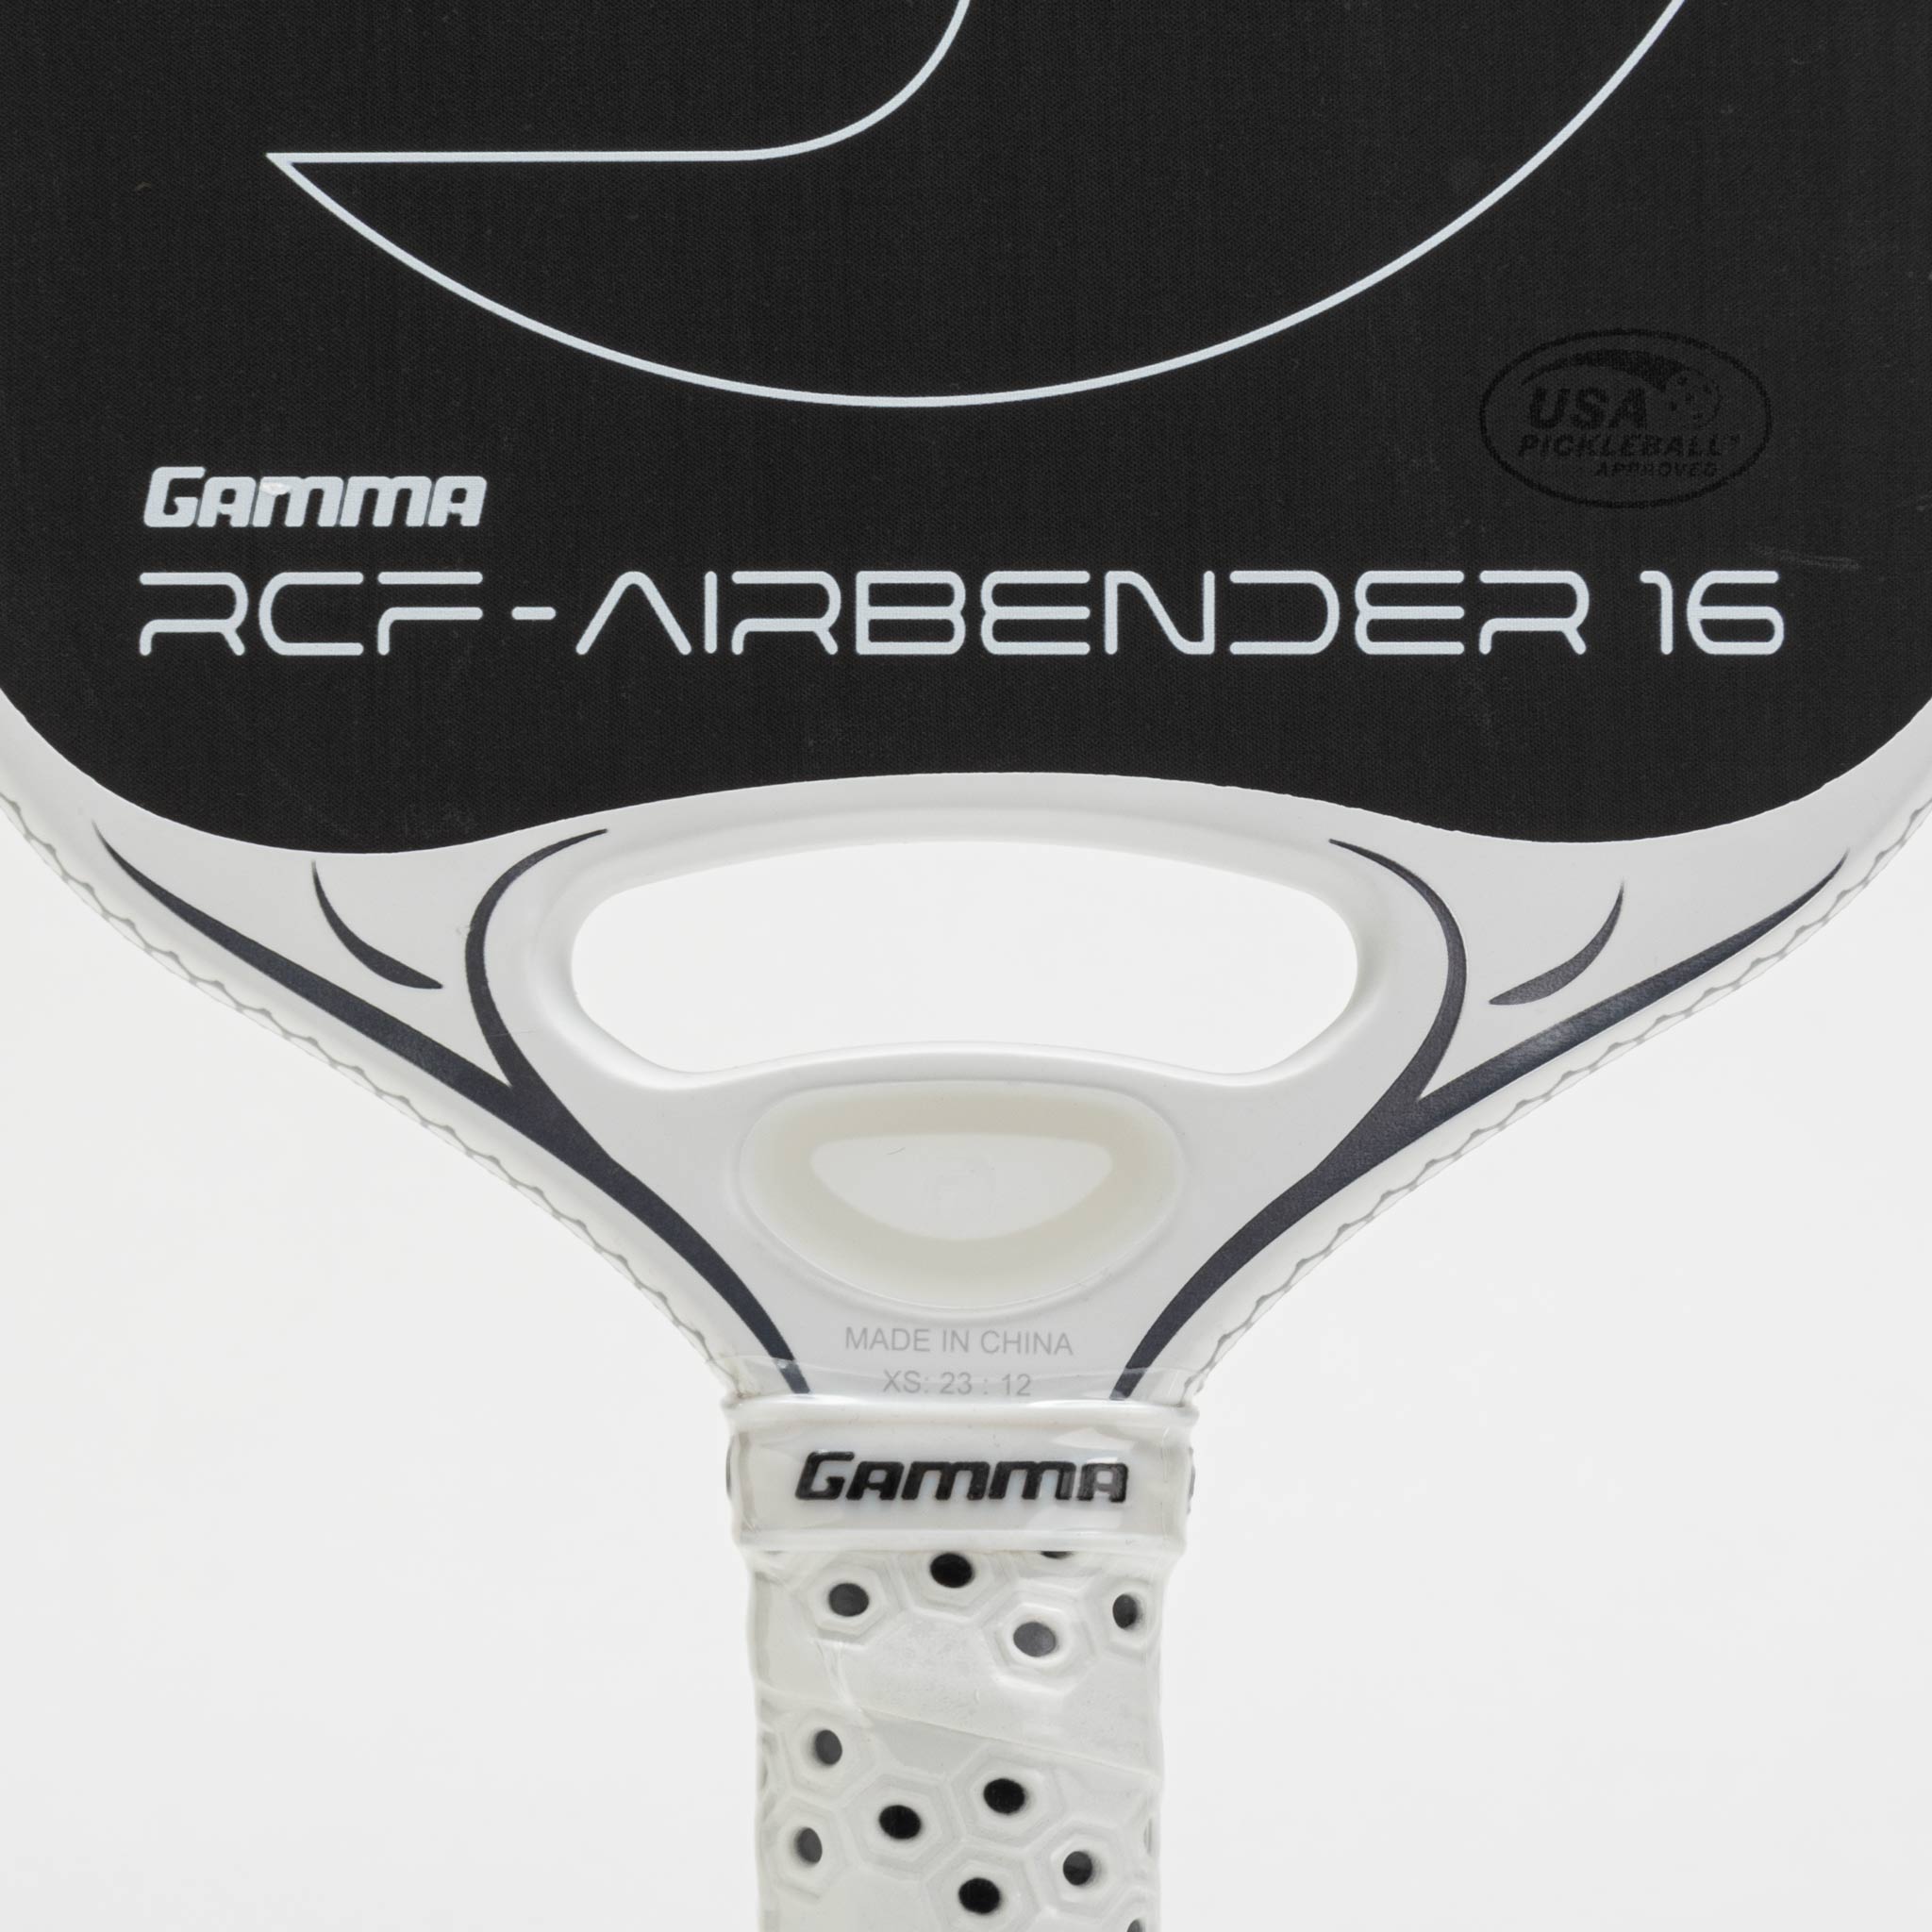 Gamma RCF Airbender 16 Paddle